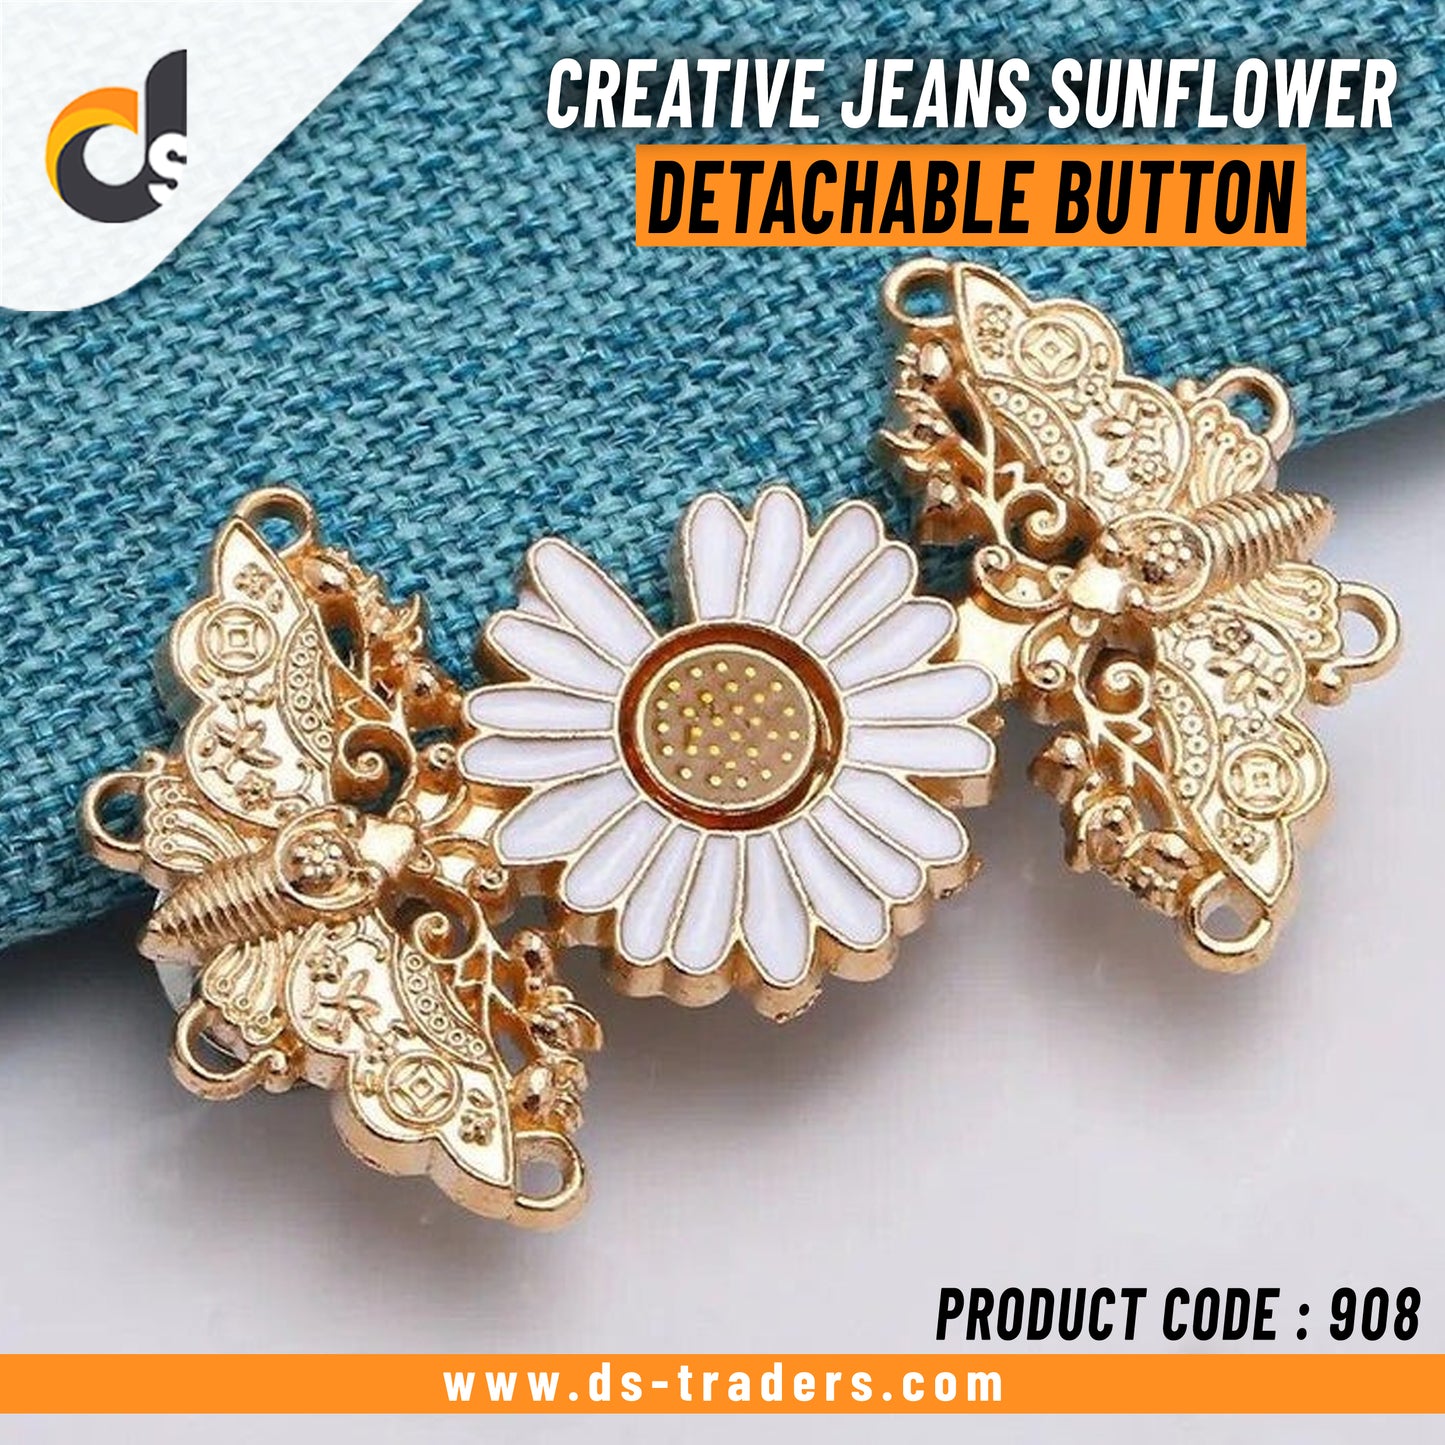 Creative Jeans Sunflower Detachable Waist Tighten Button